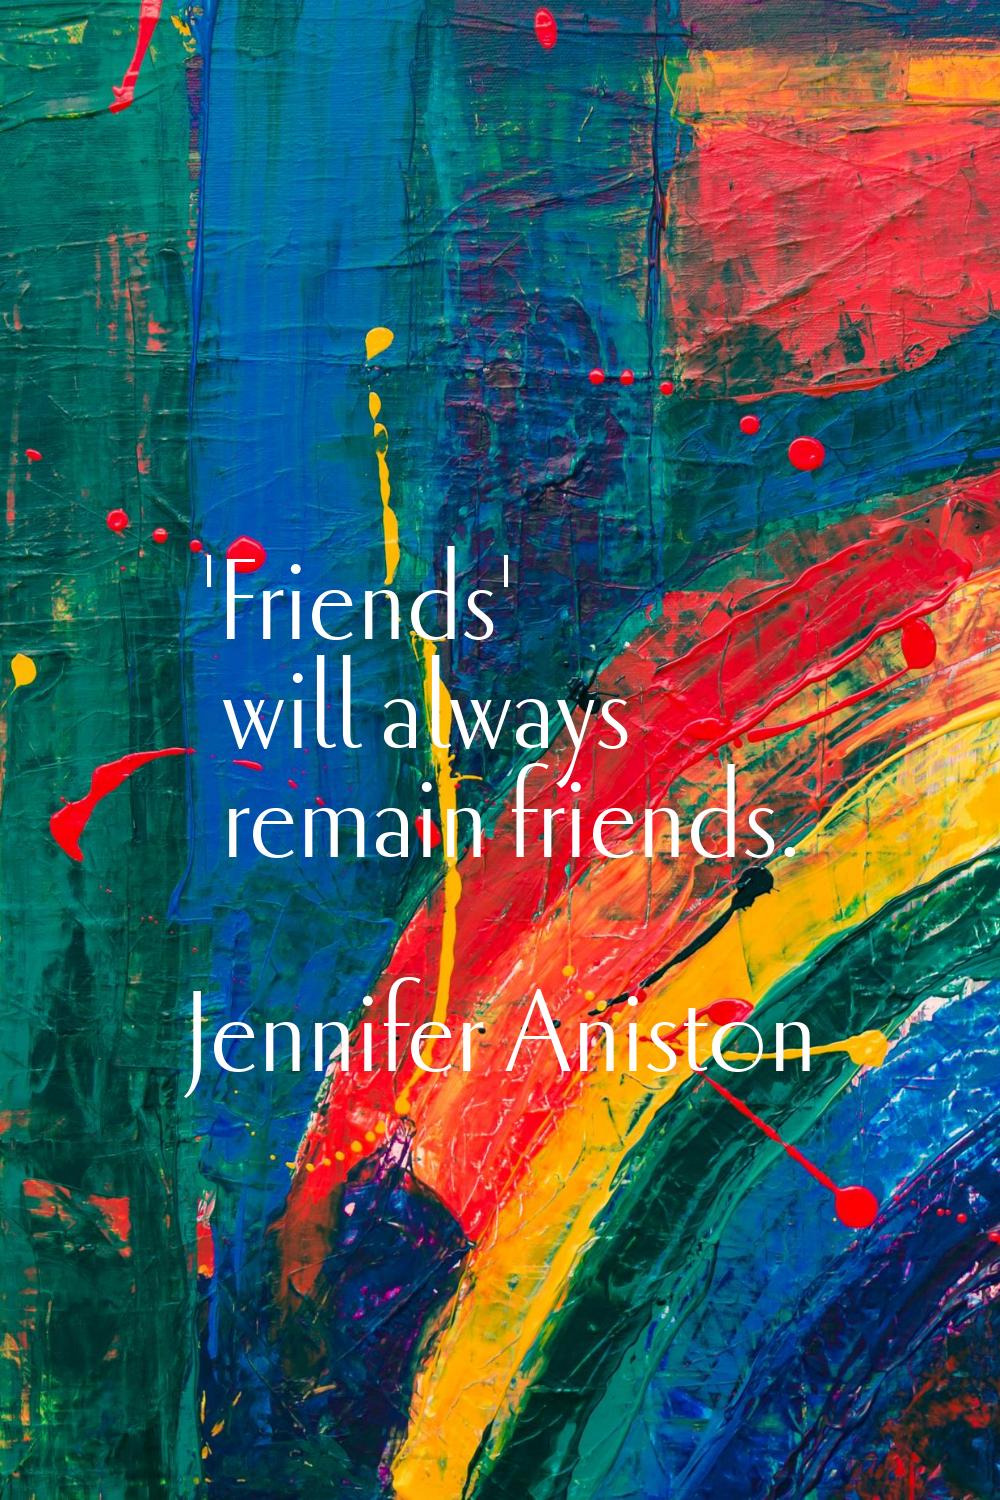 'Friends' will always remain friends.